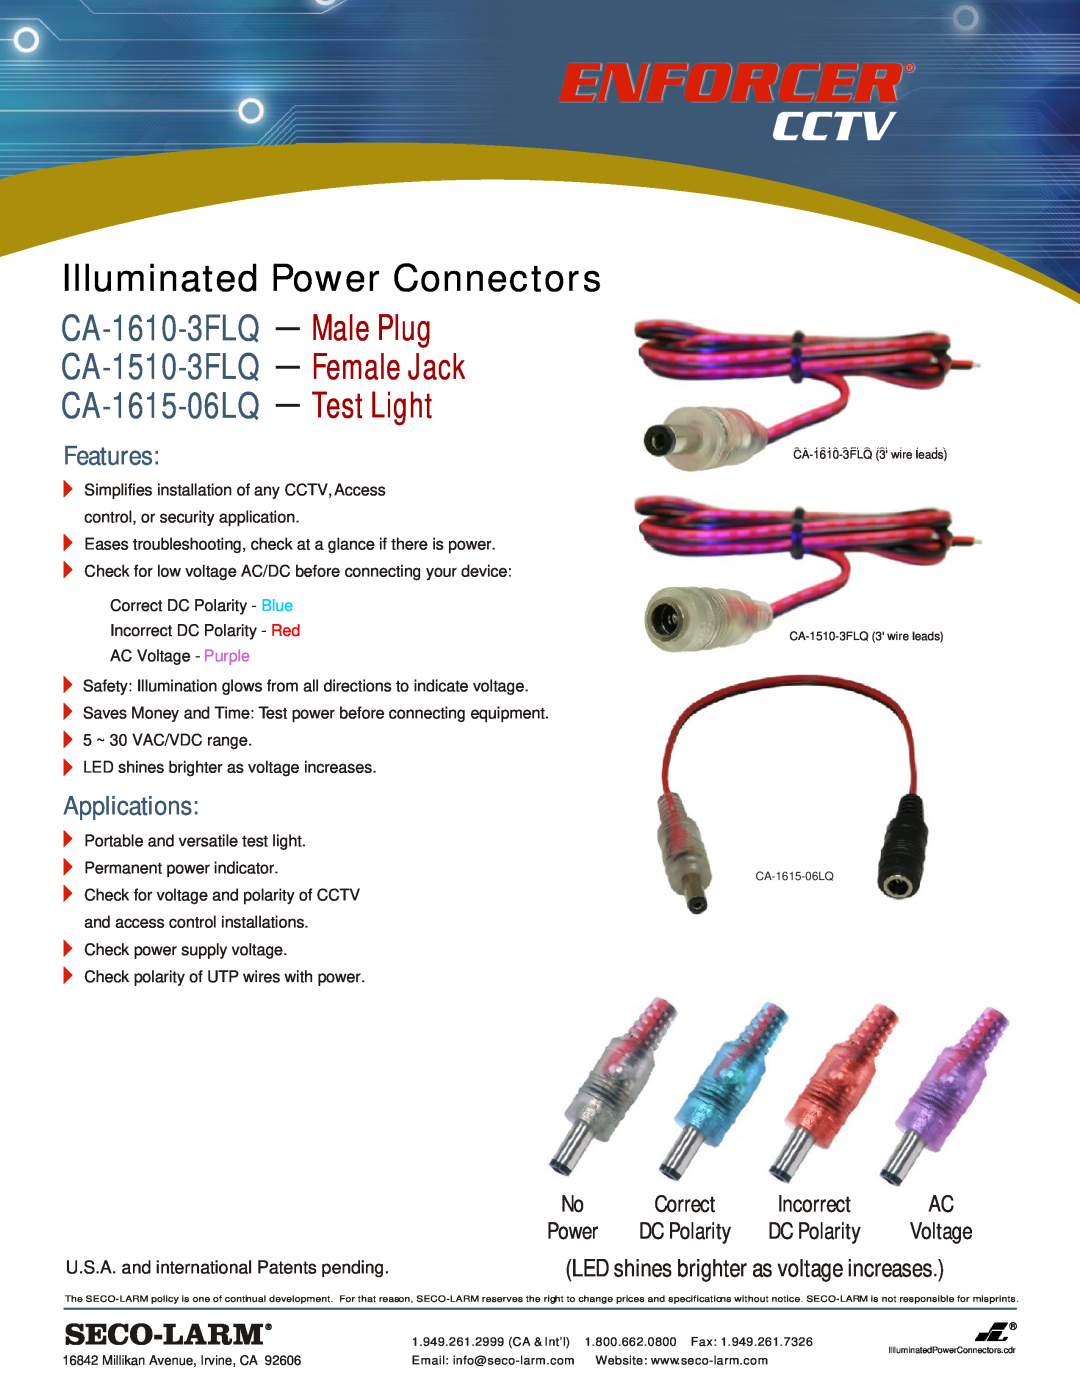 SECO-LARM USA CA-1610-3FLQ technical specifications Illuminated Power Connectors, CA-1615-06LQ - Test Light, Features 